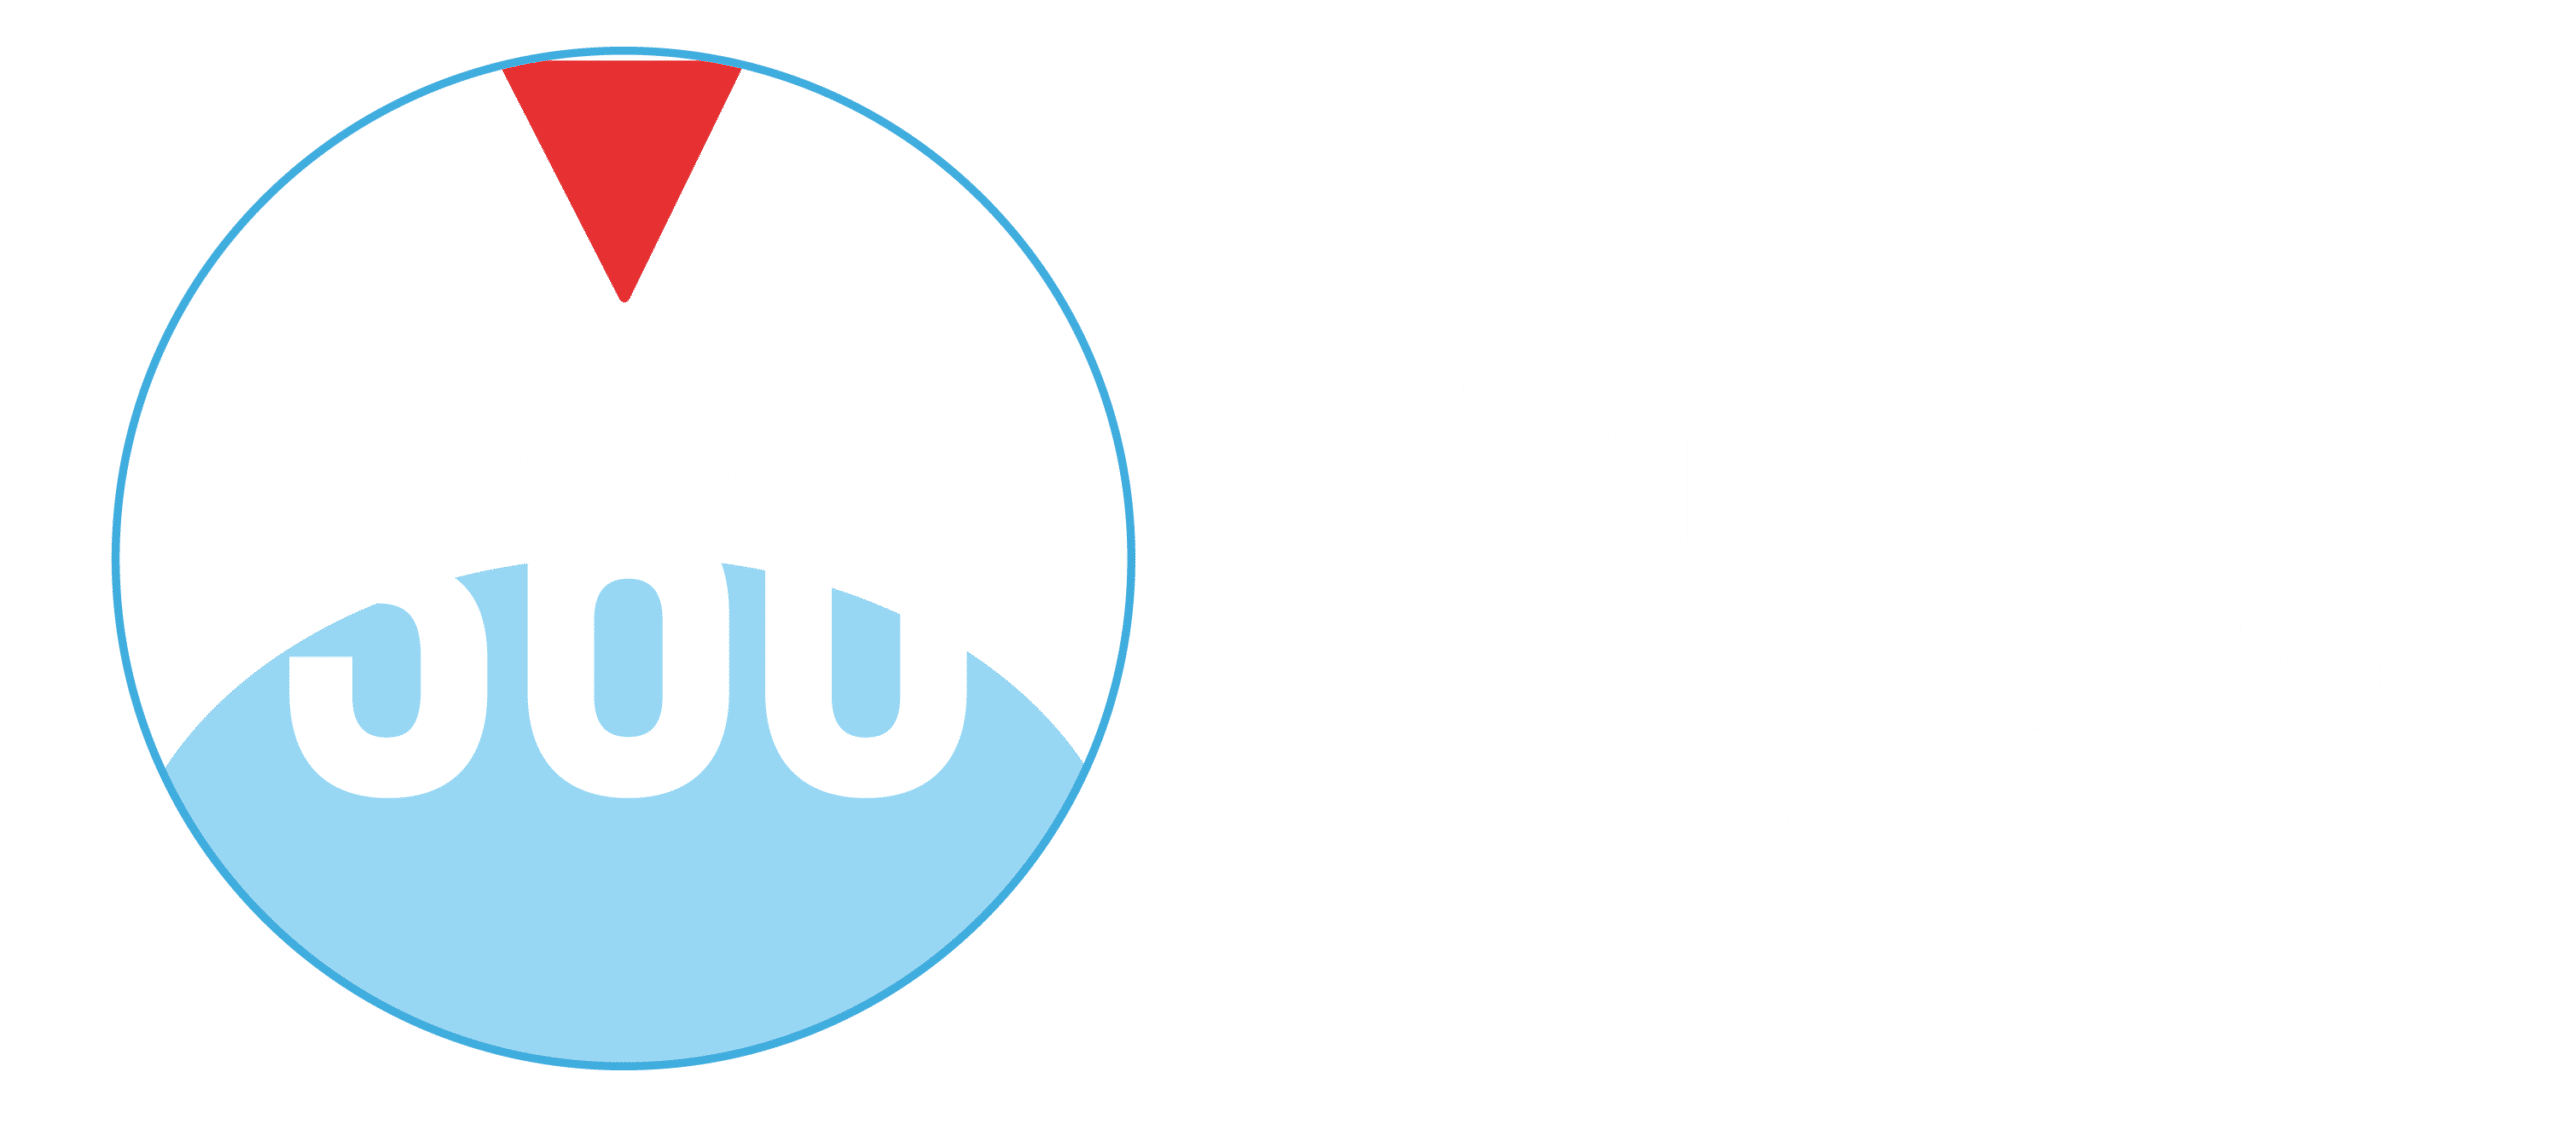 Smart Value (White)